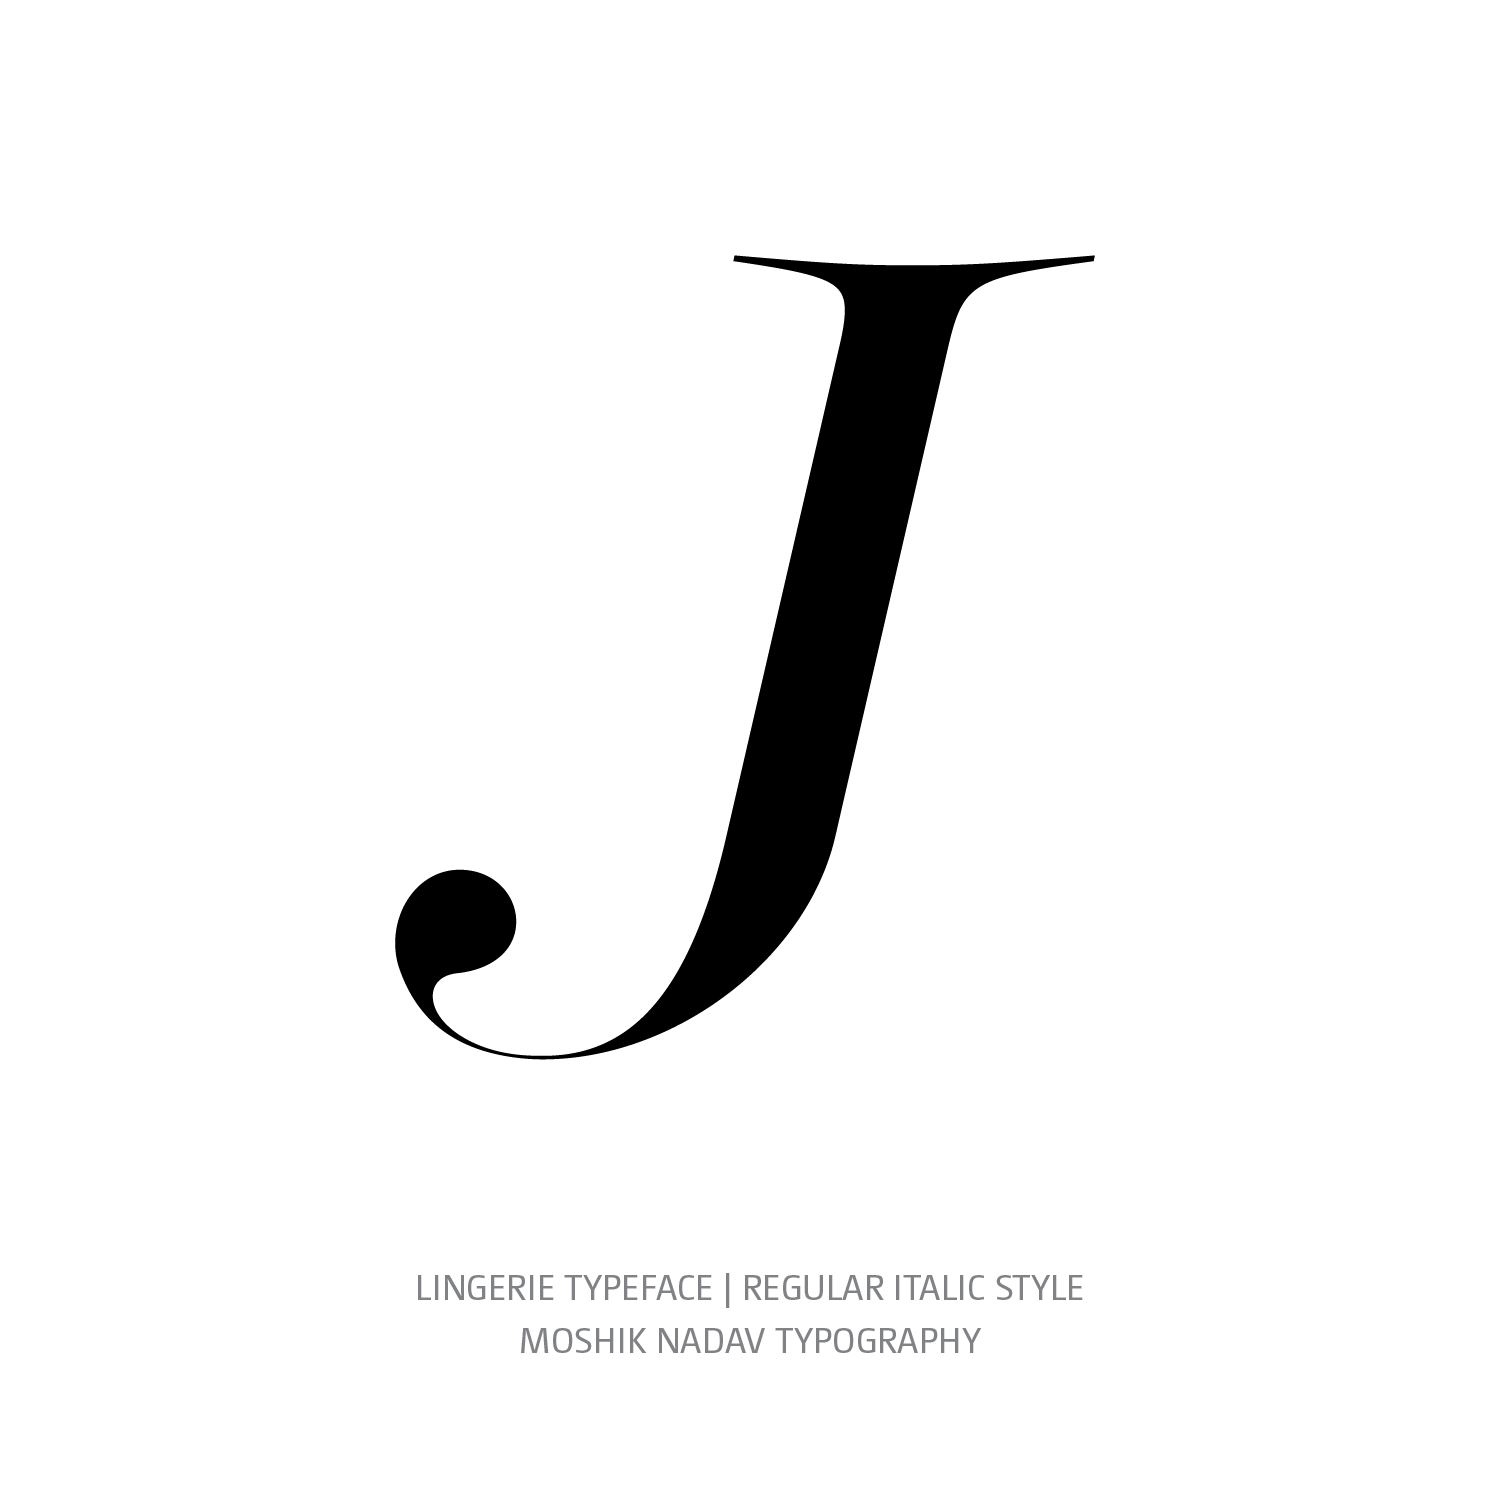 Lingerie Typeface Regular Italic J- Fashion fonts by Moshik Nadav Typography